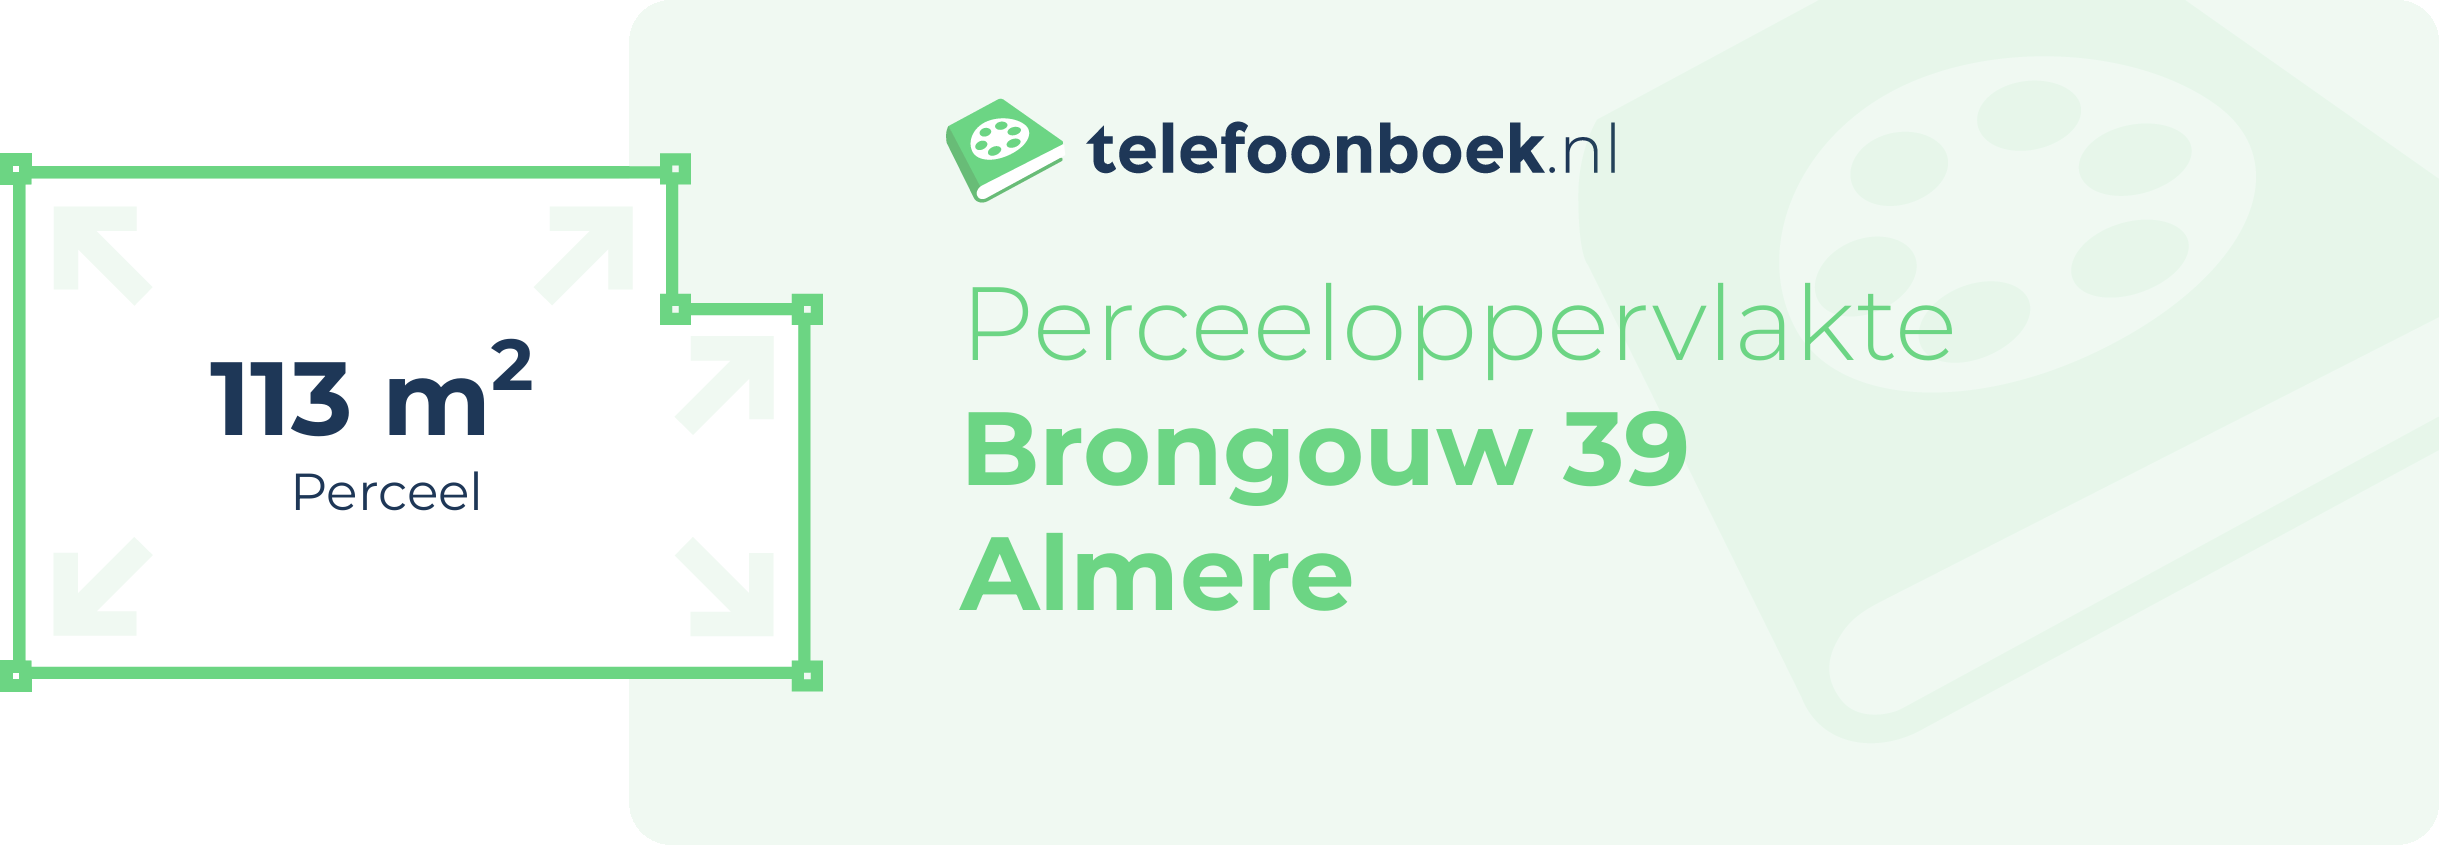 Perceeloppervlakte Brongouw 39 Almere